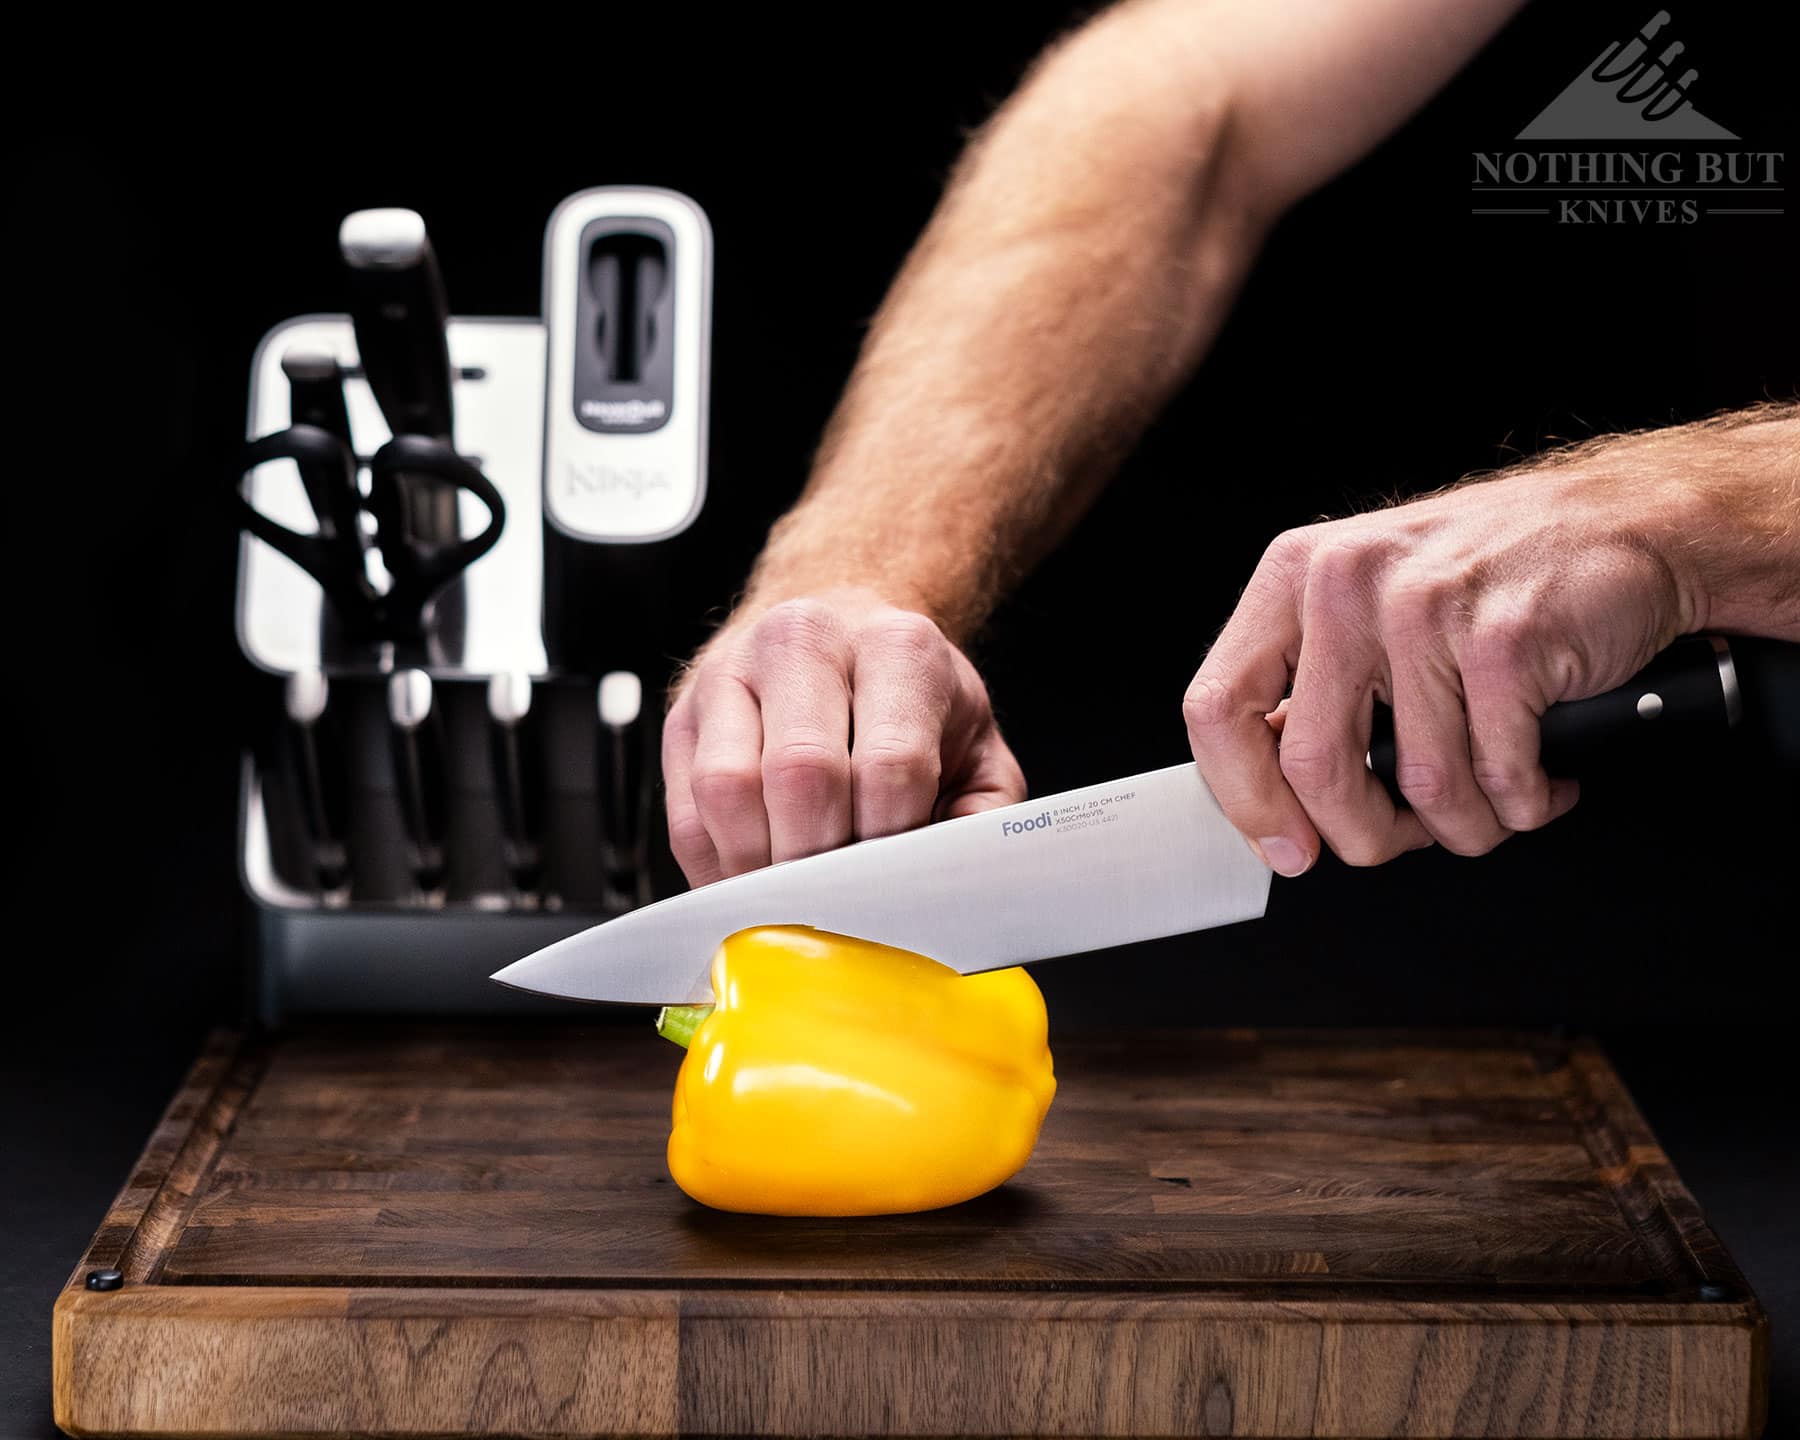 Testing the sharpness of the Ninja Foodi K32009 knife set with self sharpening block. 